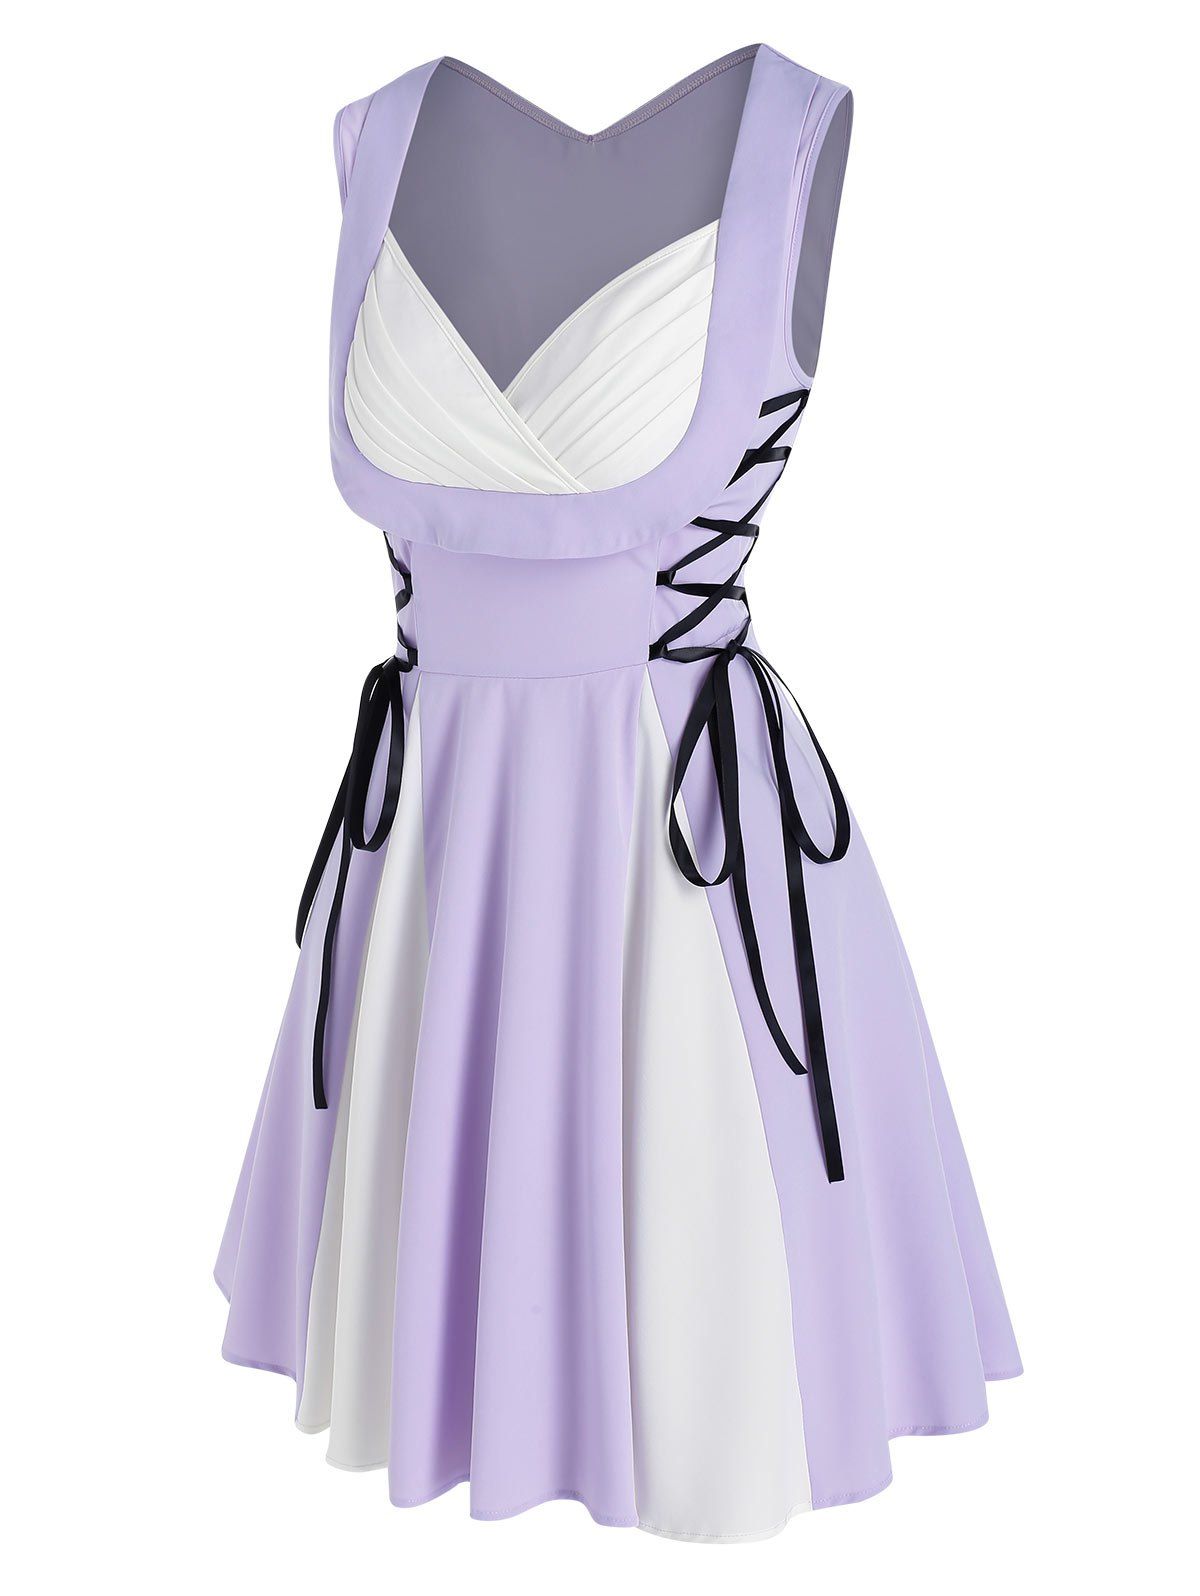 Sleeveless Lace-up Contrast Faux Twinset Dress - LIGHT PURPLE M